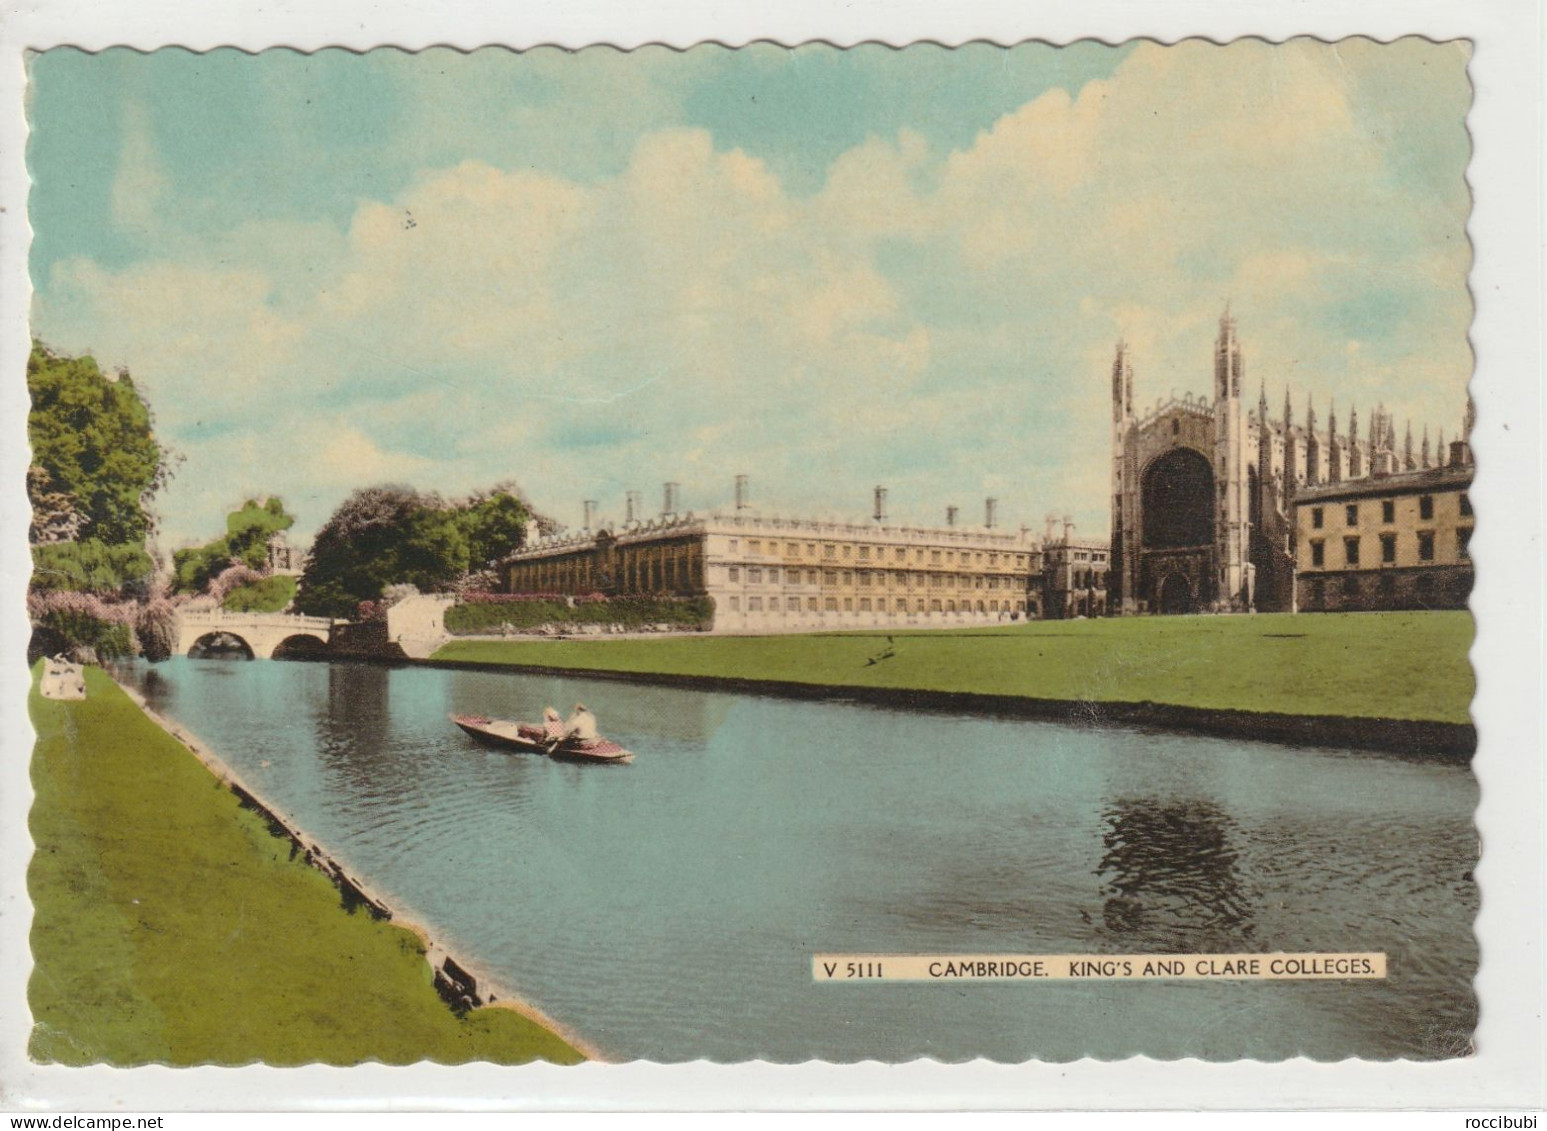 Cambridge - Cambridge